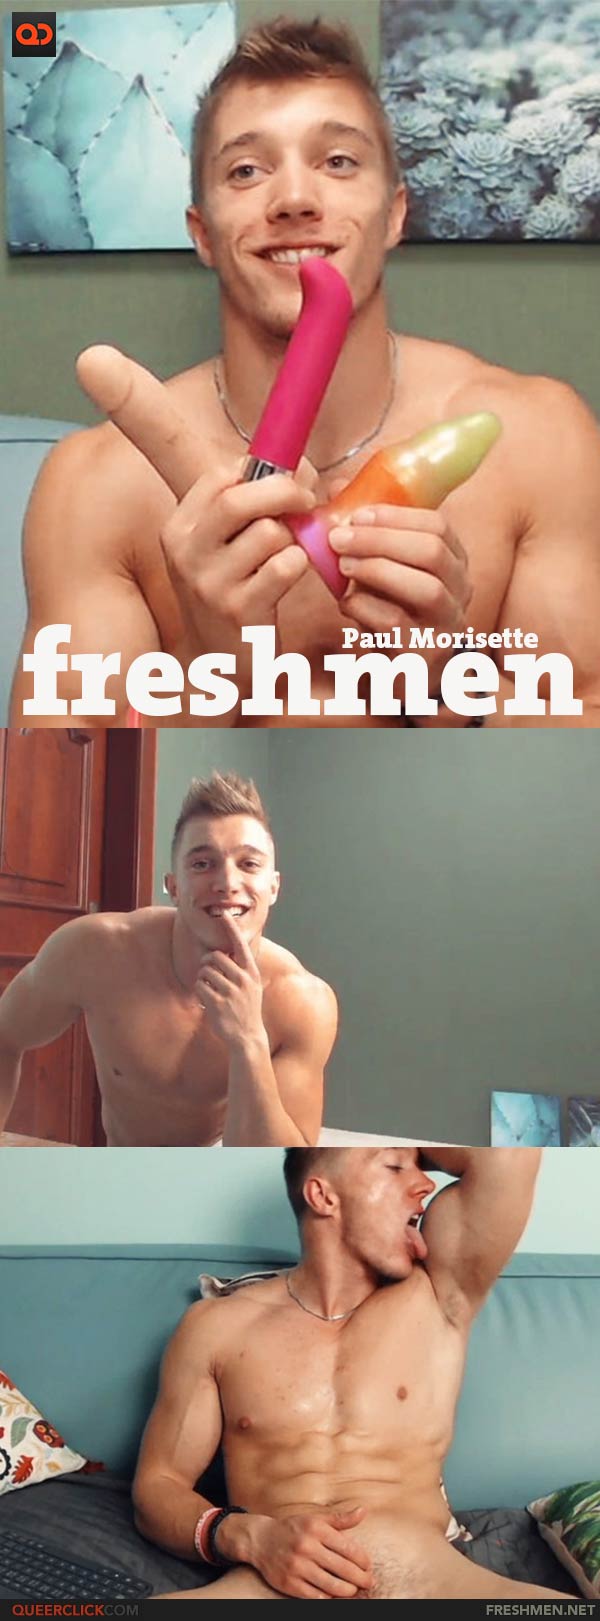 Freshmen: Paul Morisette